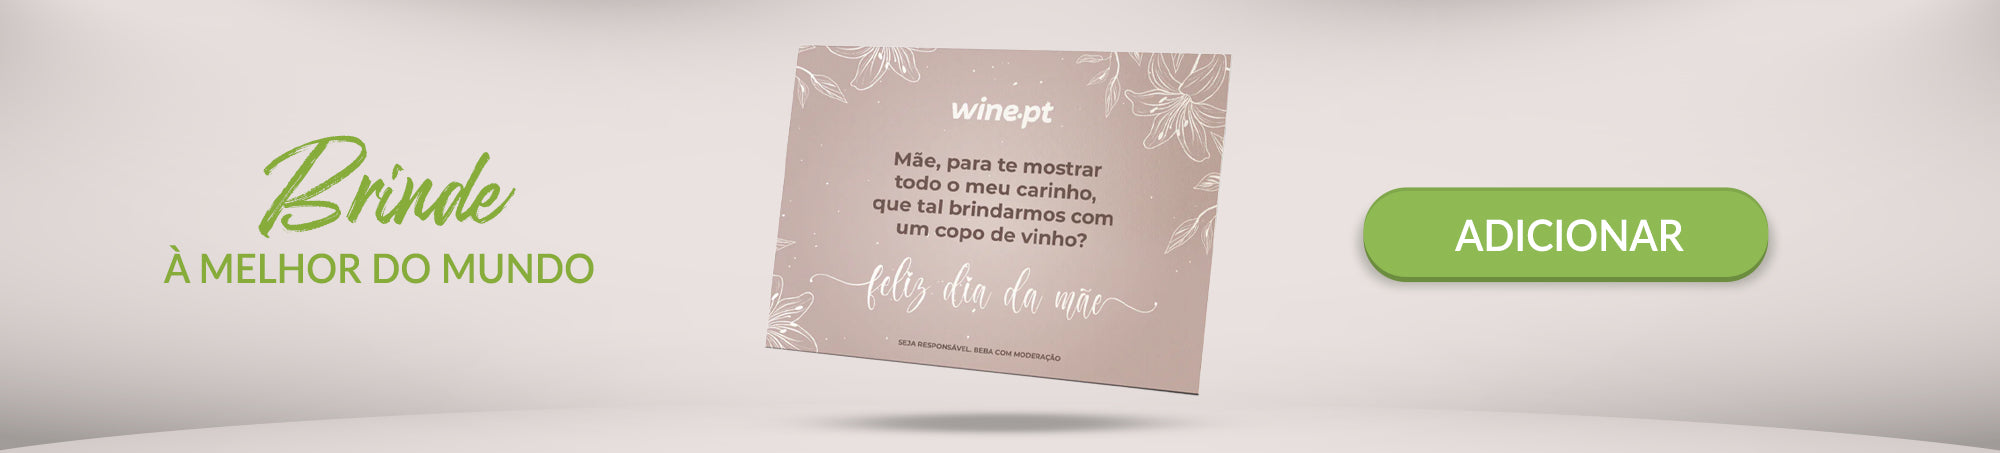 wine.pt